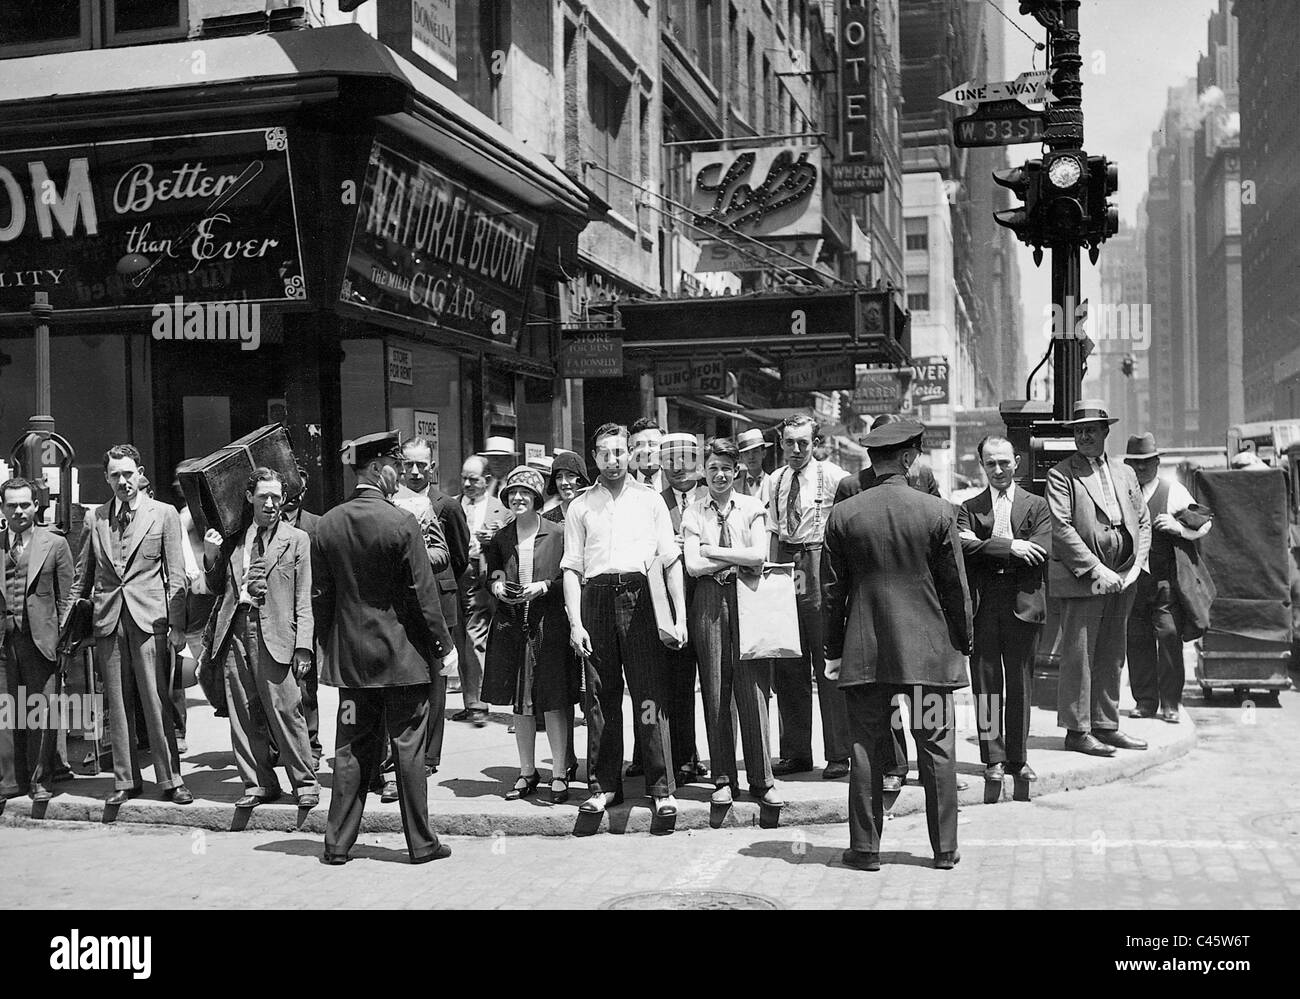 Pedestrian traffic lights in New York, 1930 Stock Photo - Alamy